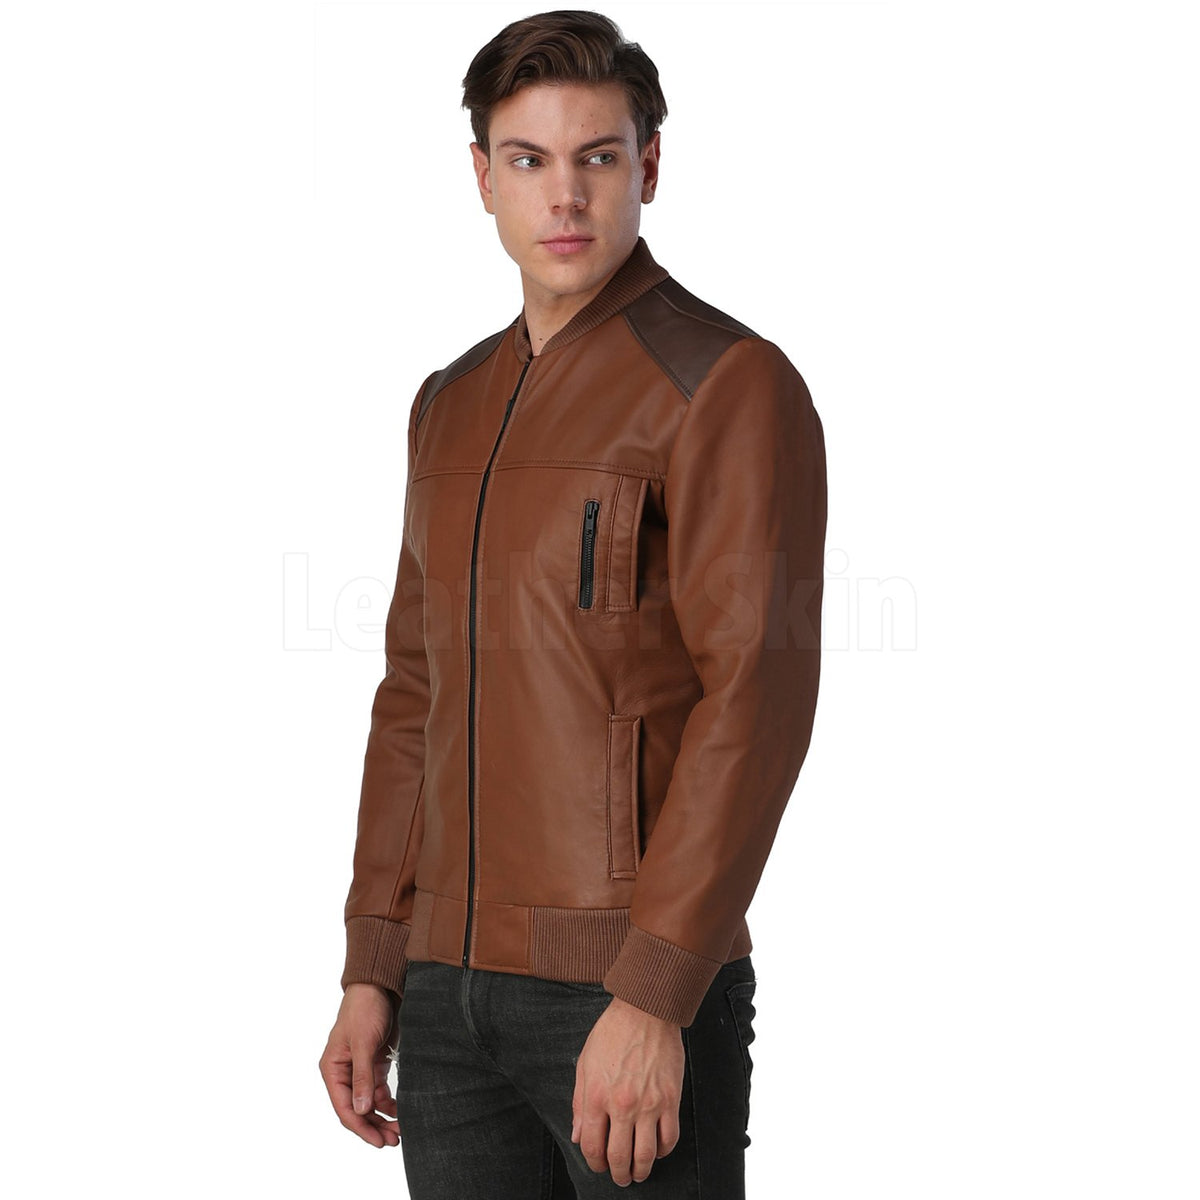 Men’s Brown Leather Jacket